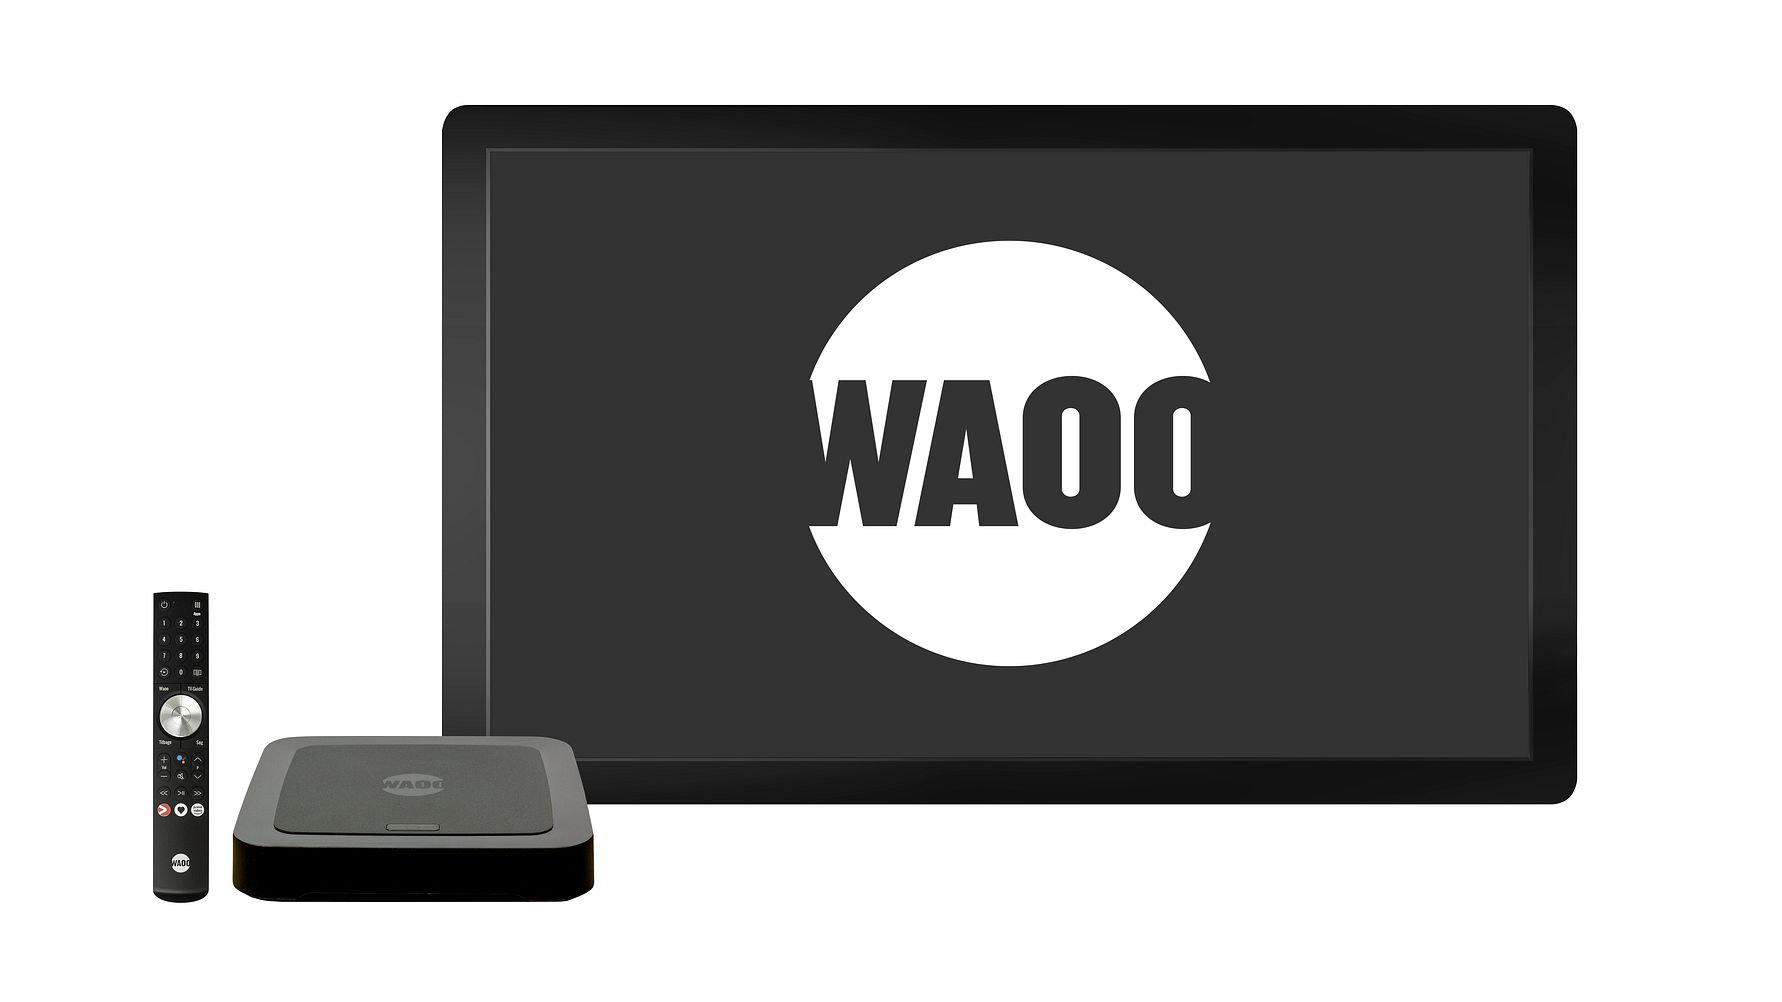 eksplodere hat knap Waoo styrker sin TV-position med ny tv-boks og Prime Video | Waoo A/S